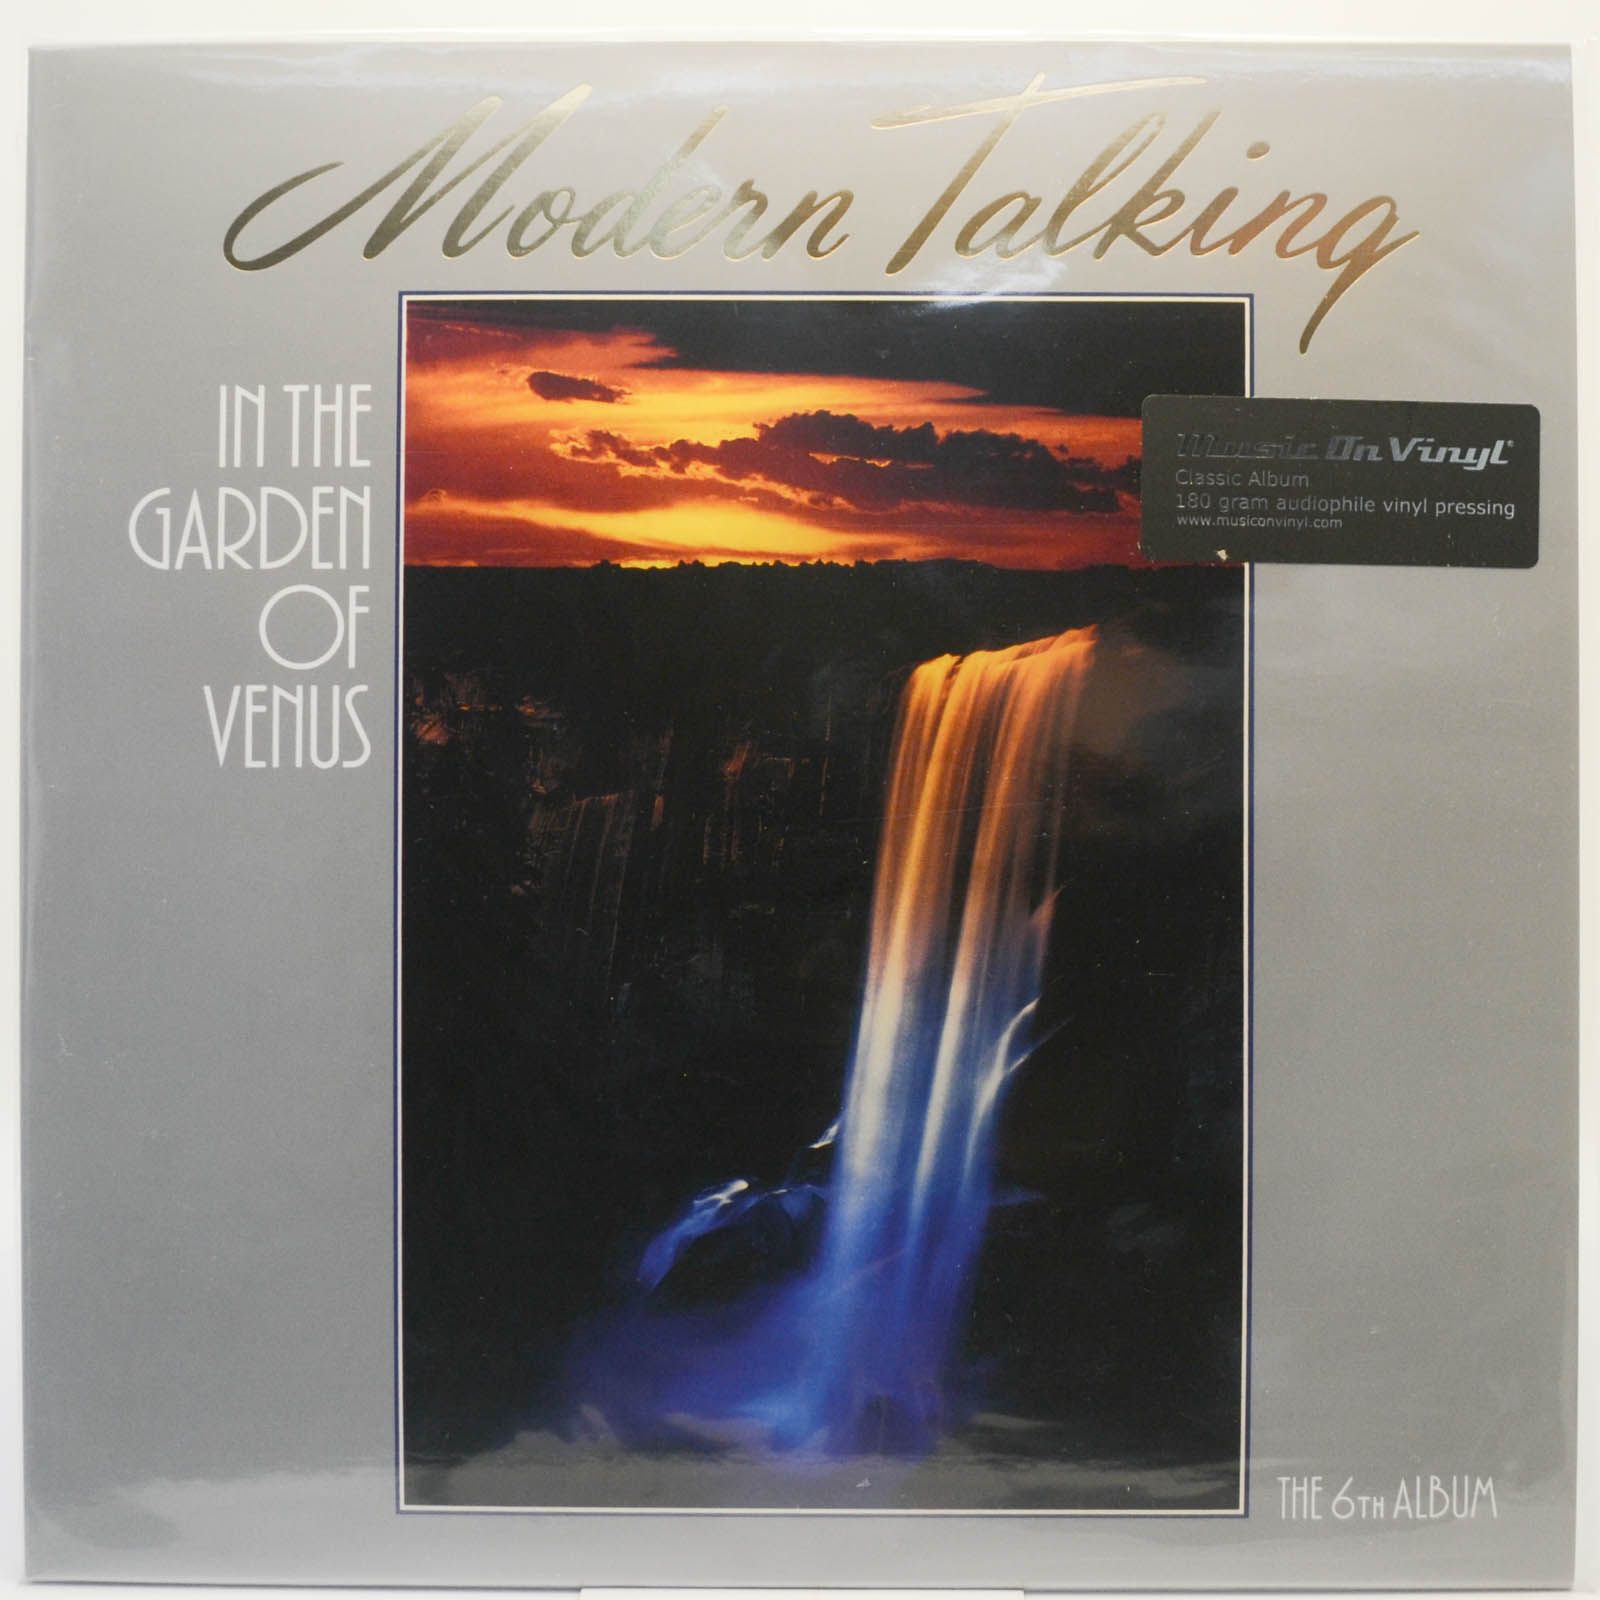 Modern Talking — In The Garden Of Venus - The 6th Album, 1987